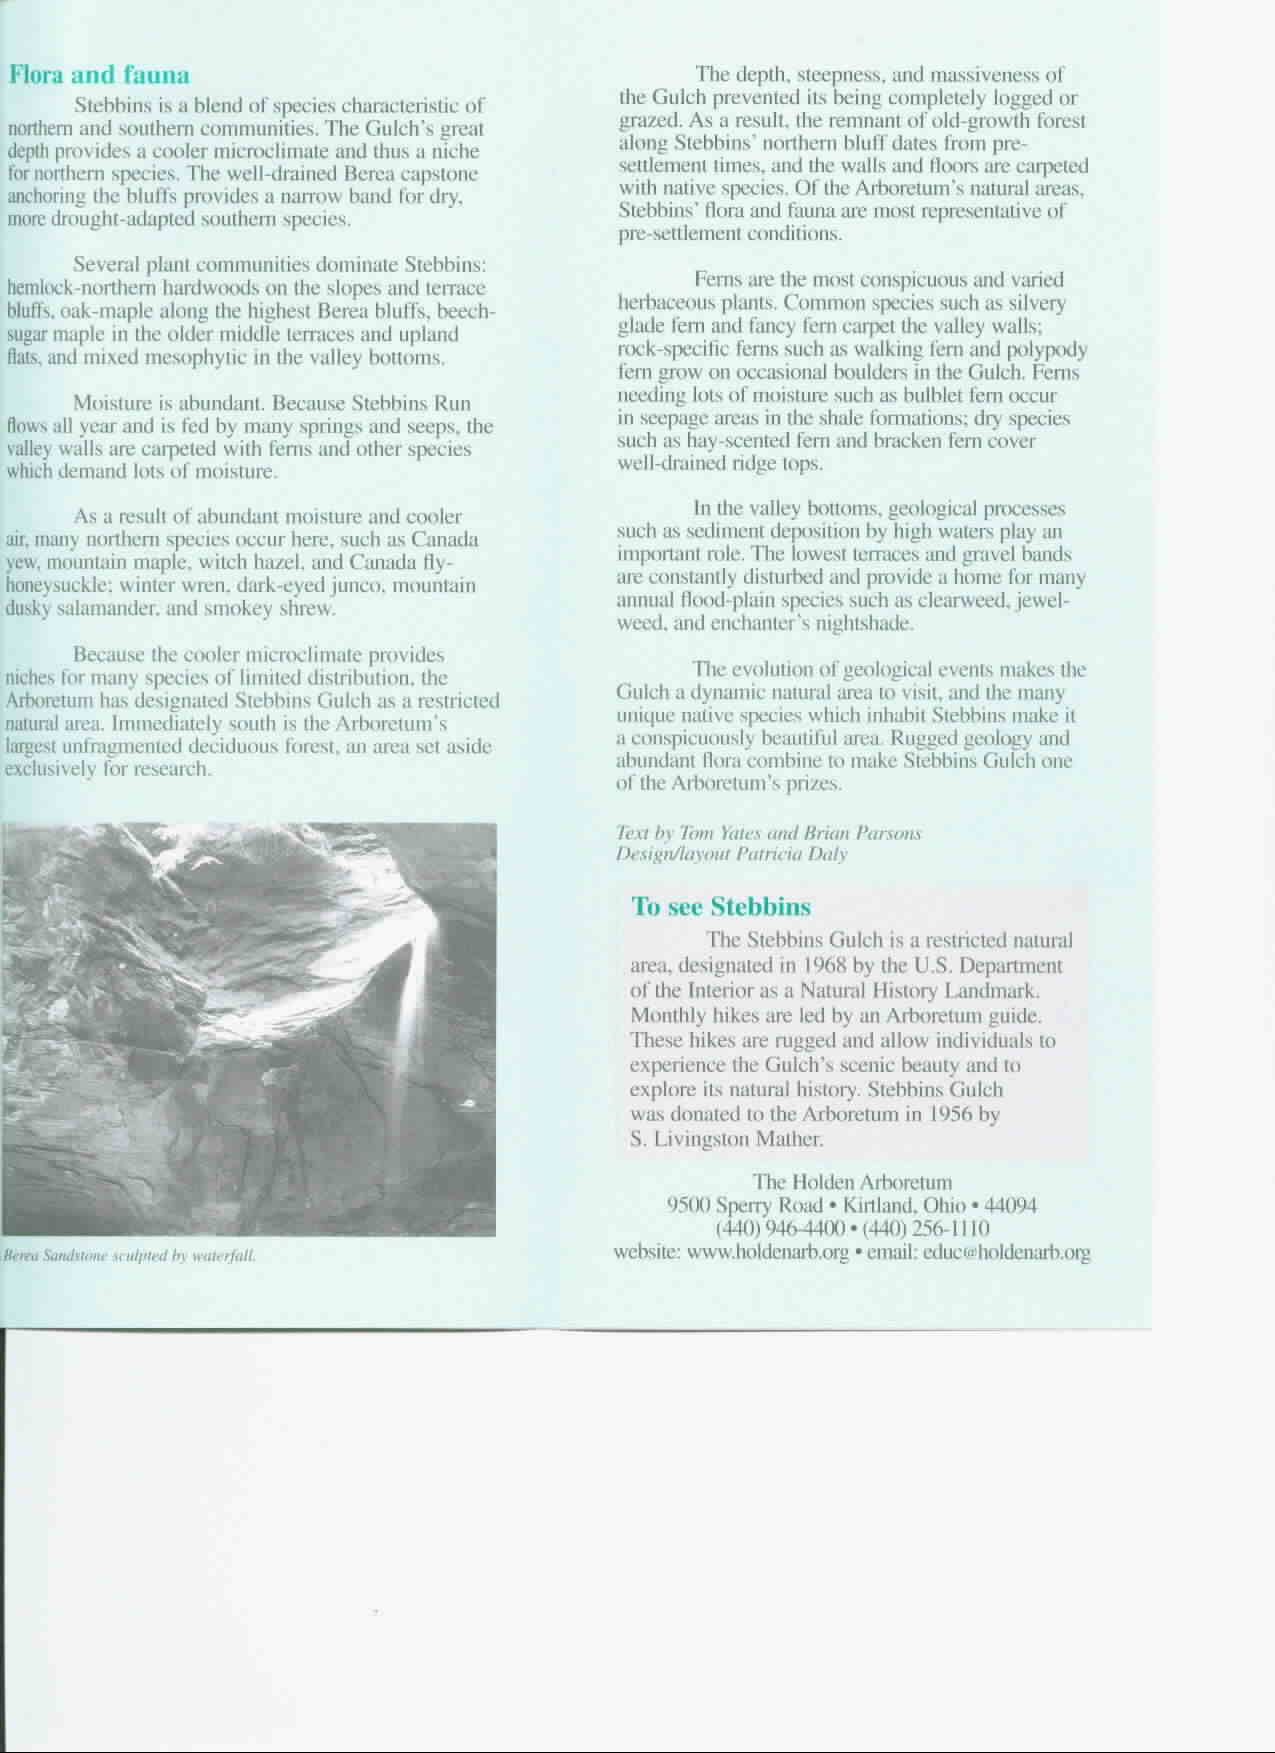 Stebbins Gulch Brochure Part 4